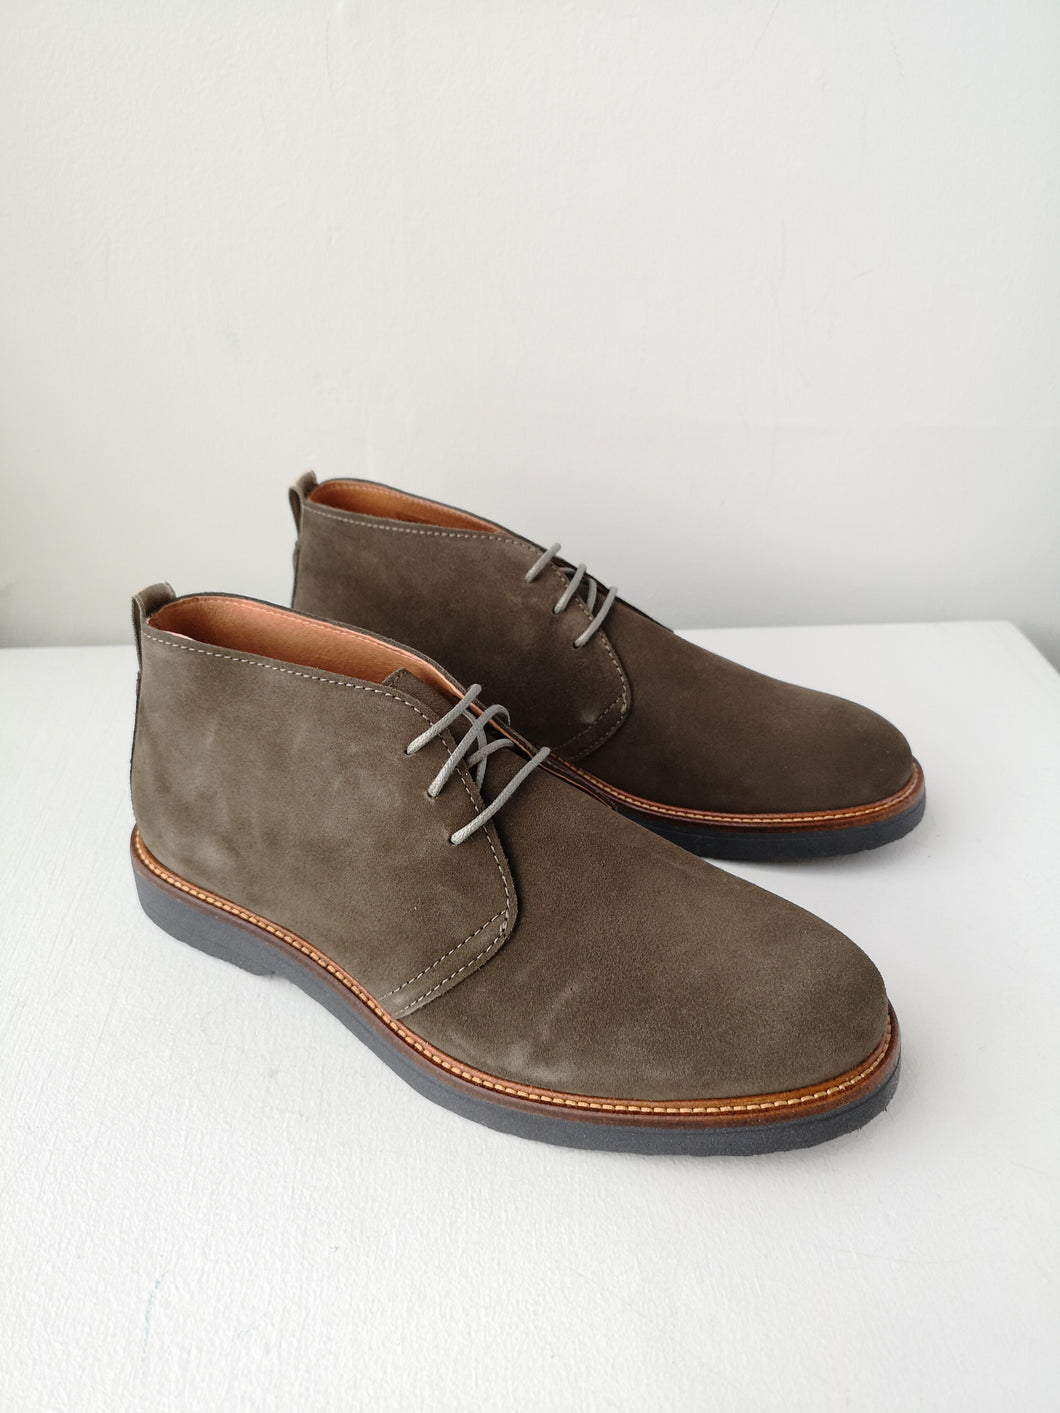 Shoe The Bear Kip Desert Boots - Khaki Suede